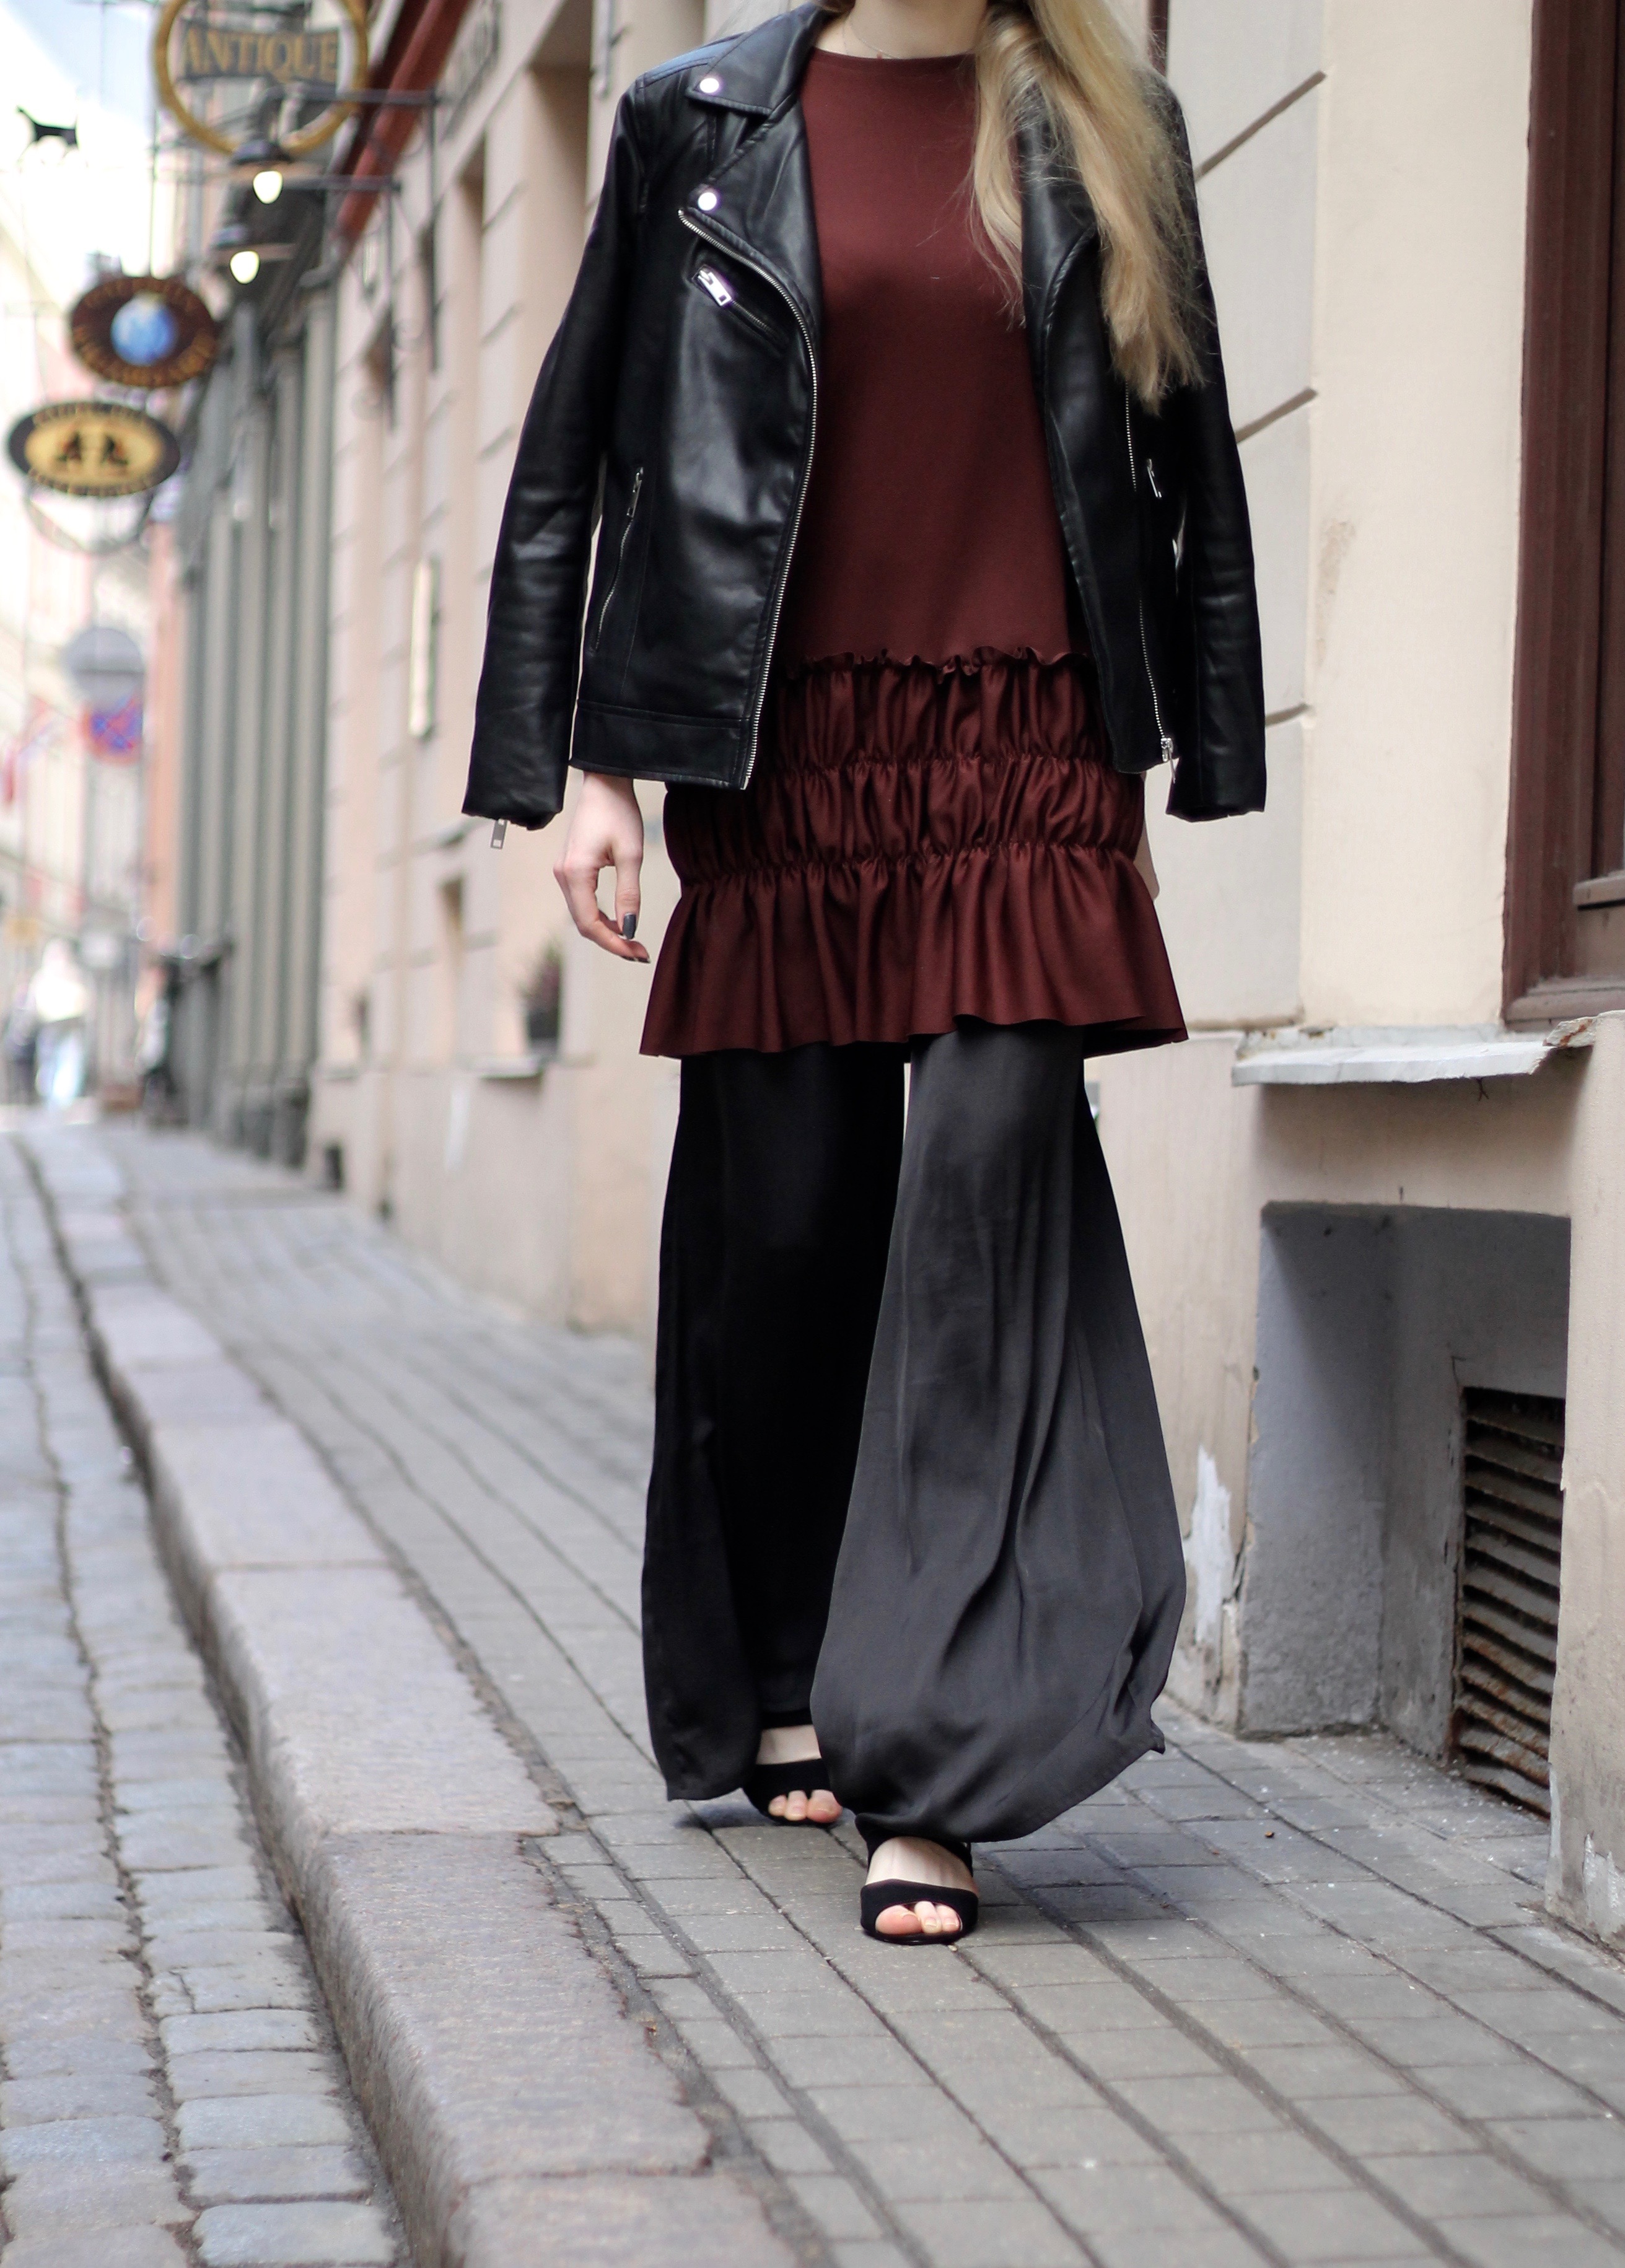 MON MODE / Fashion Blogger / Denim Culottes / Lisbon, Portugal